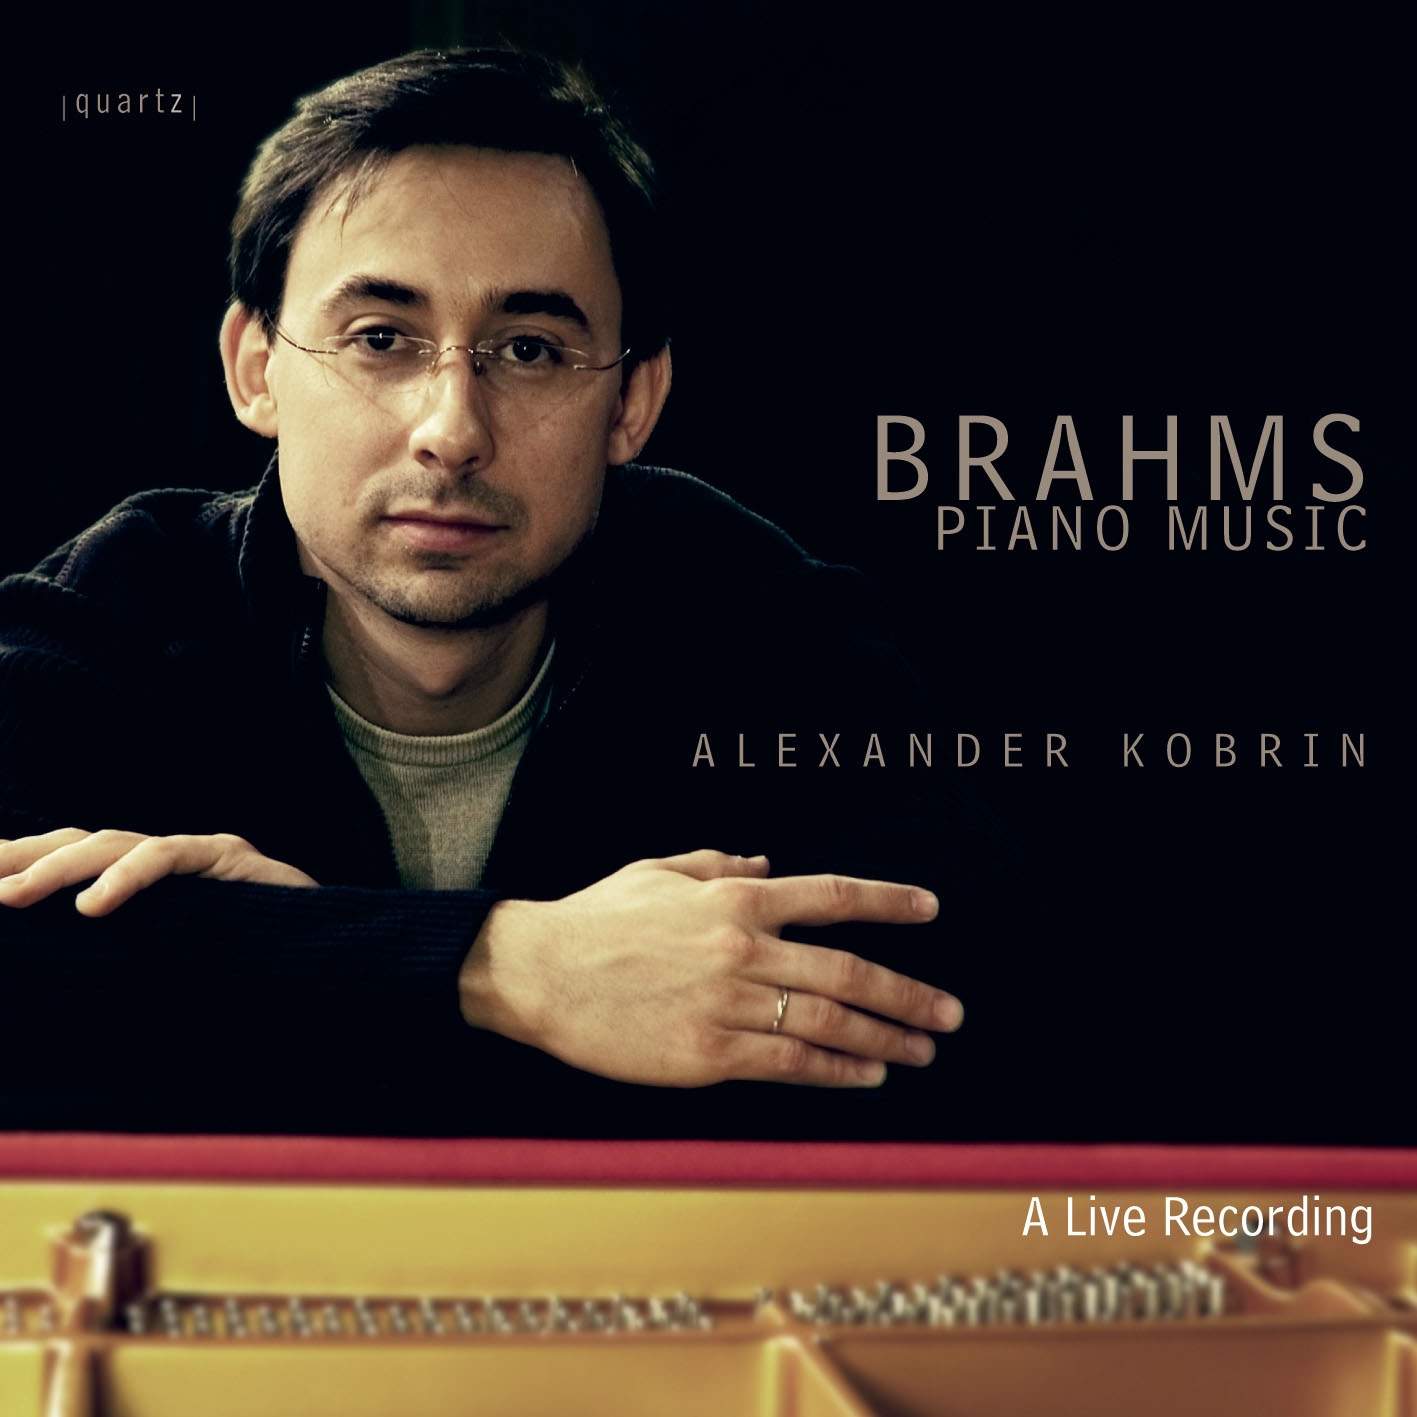 Alexander Kobrin - Piano